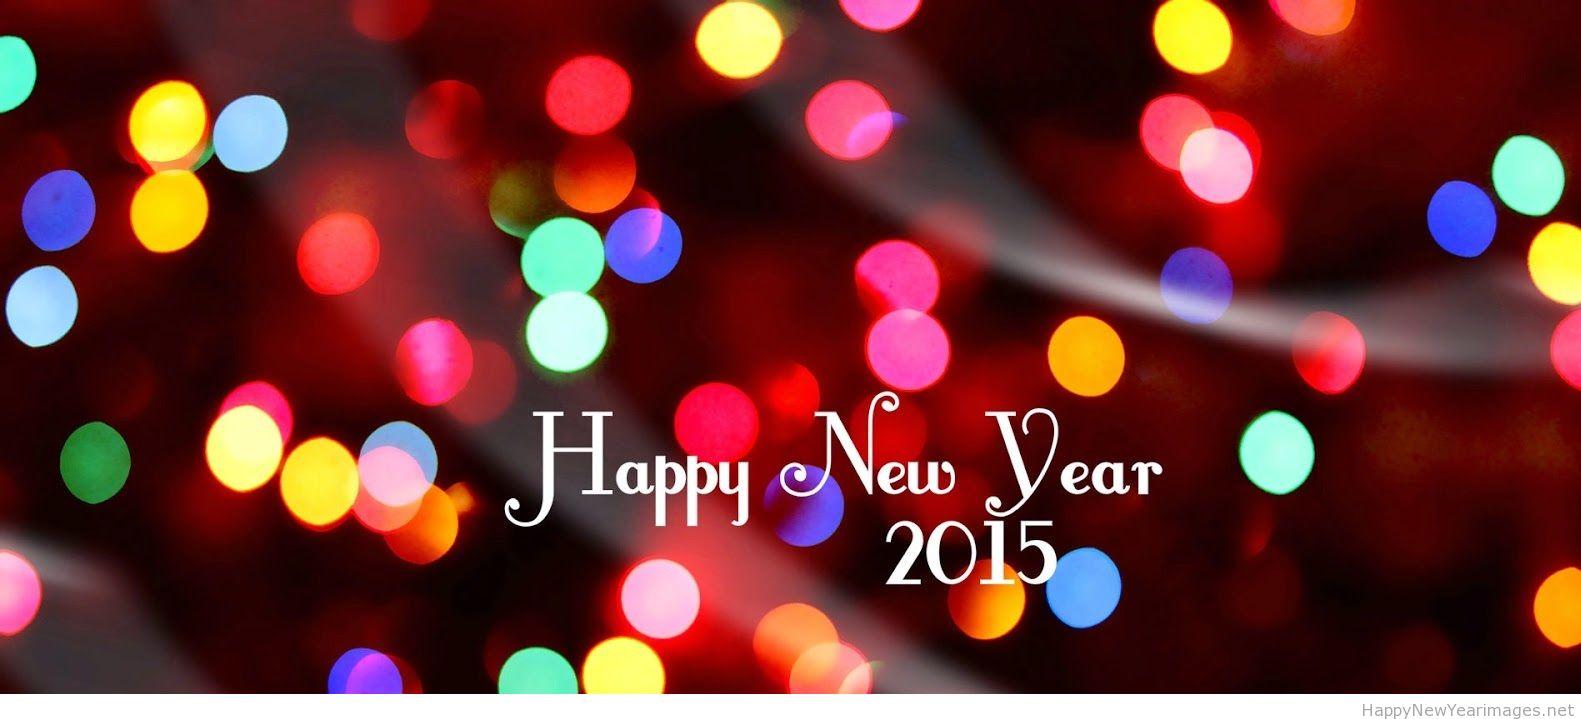 Happy new year 2015 lights wallpaper